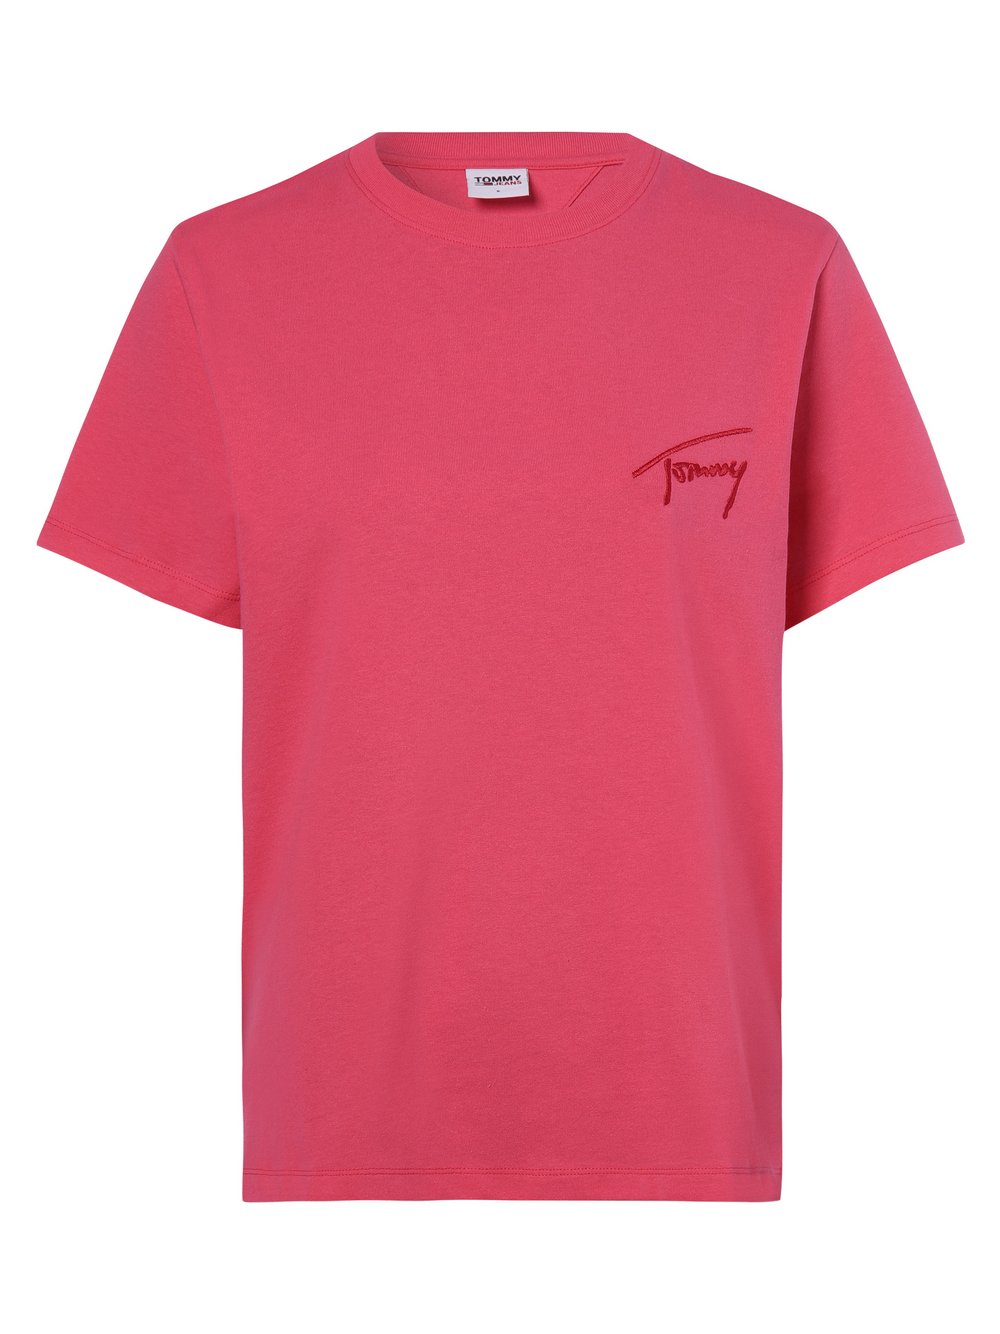 Tommy Jeans - T-shirt damski, wyrazisty róż